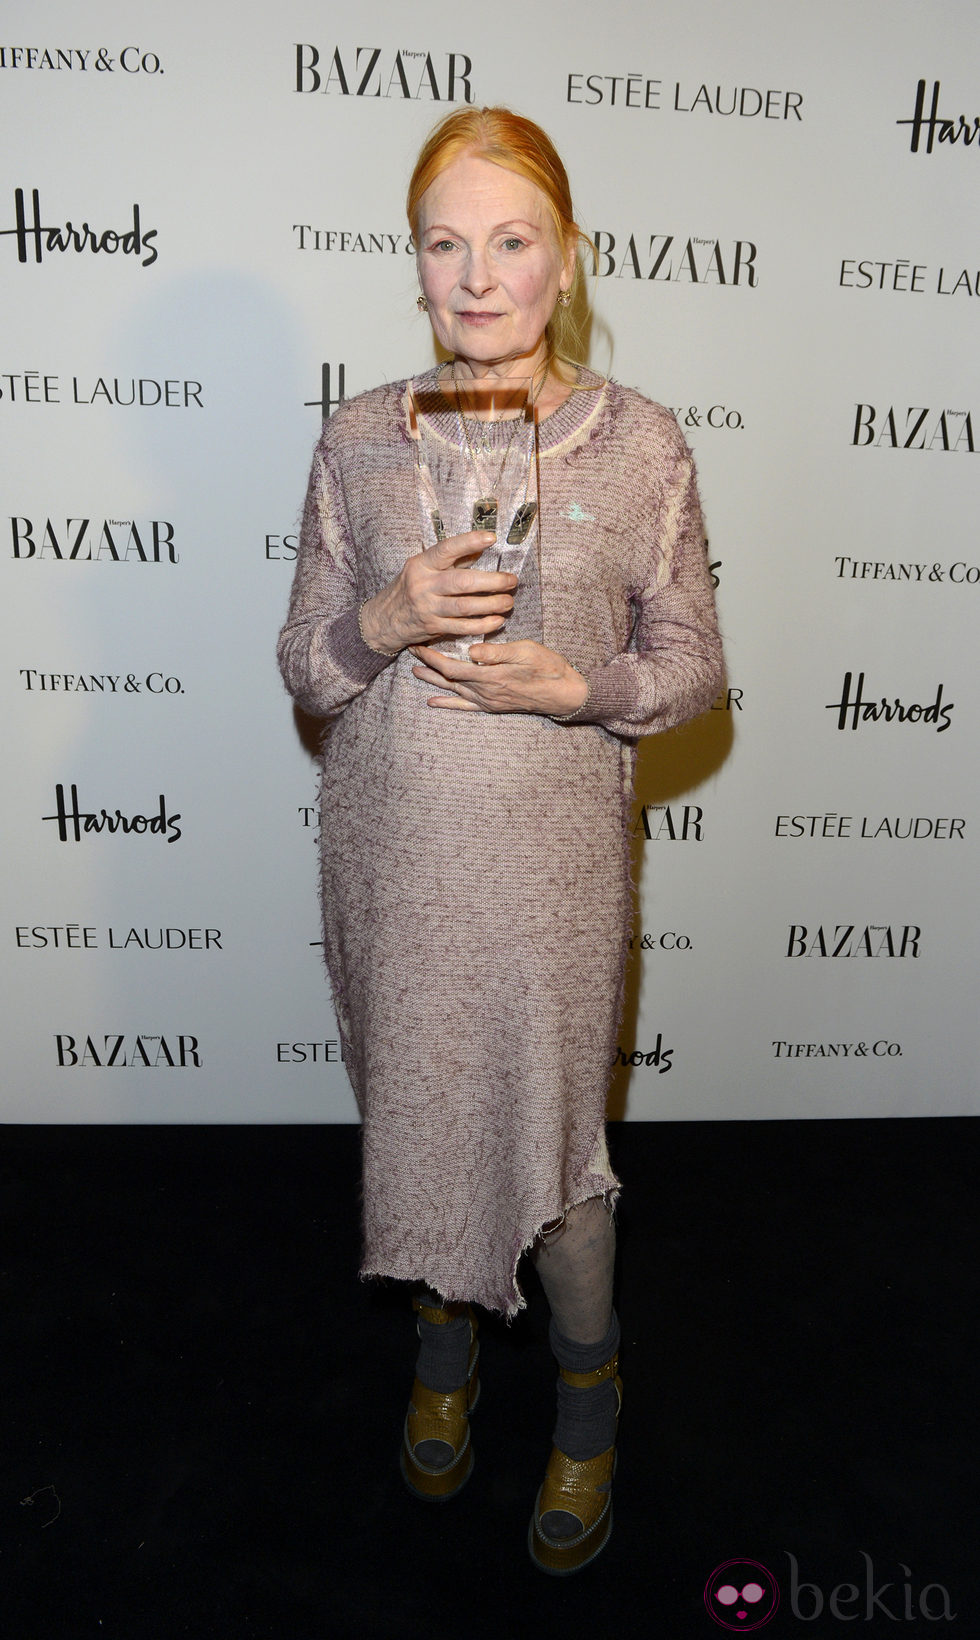 Vivienne Westwood en la gala Harper's Bazaar Mujer del Año 2012